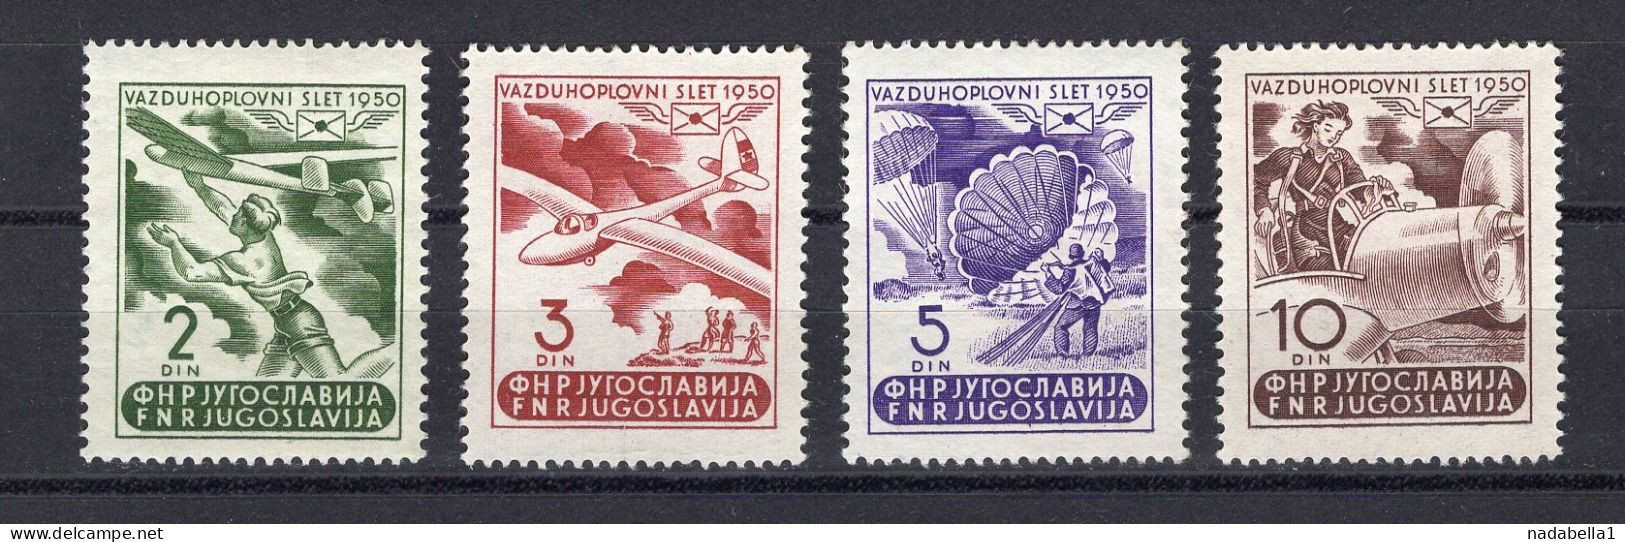 1950. YUGOSLAVIA,AVIATION MEETING,SET OF 4 STAMPS,MNH - Neufs